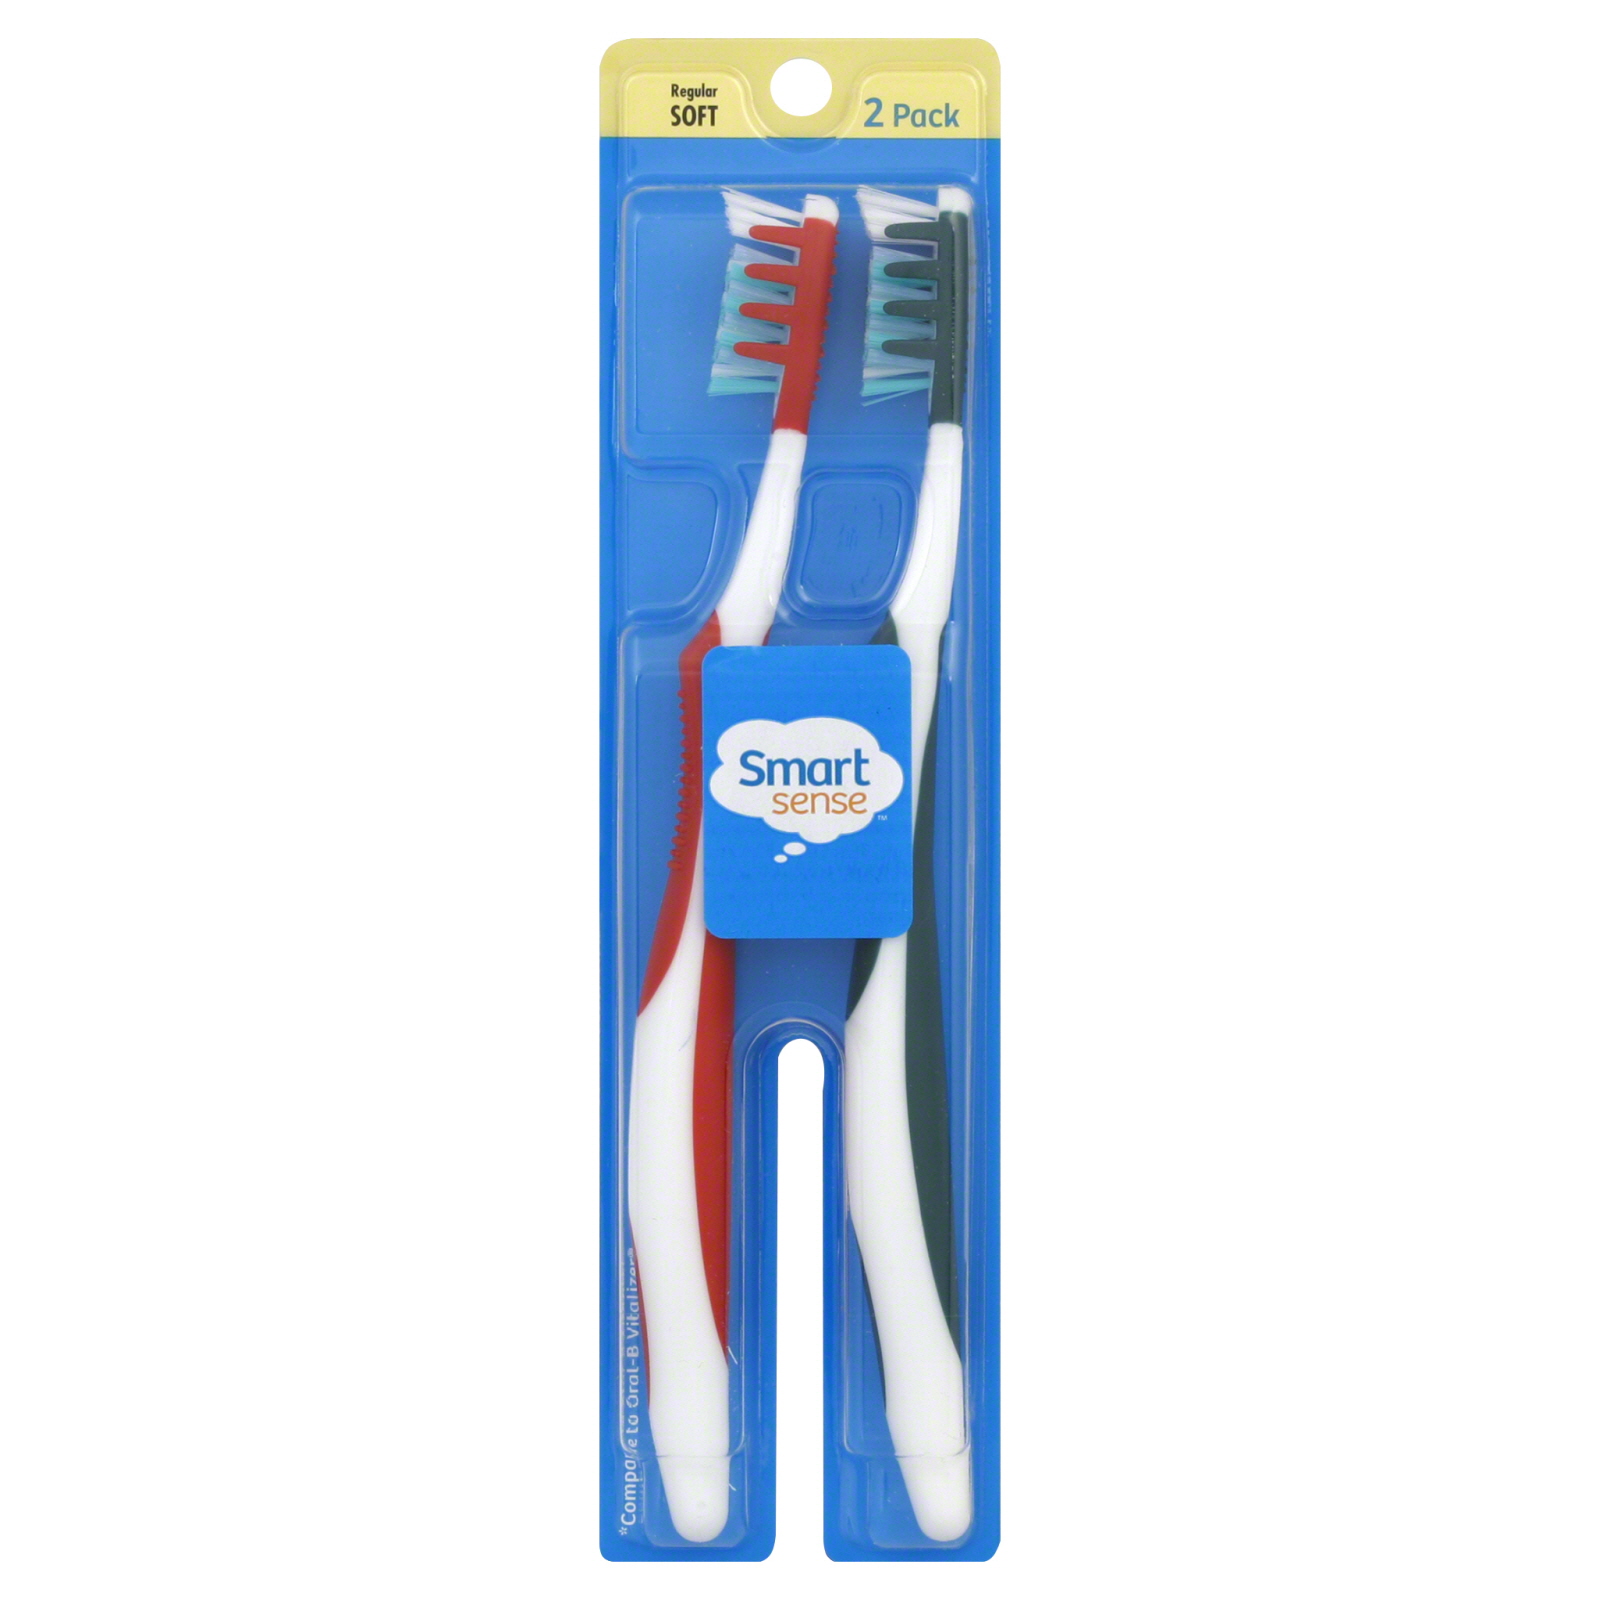 Smart Sense Toothbrushes, Regular, Soft, 2 Pack 2 toothbrushes